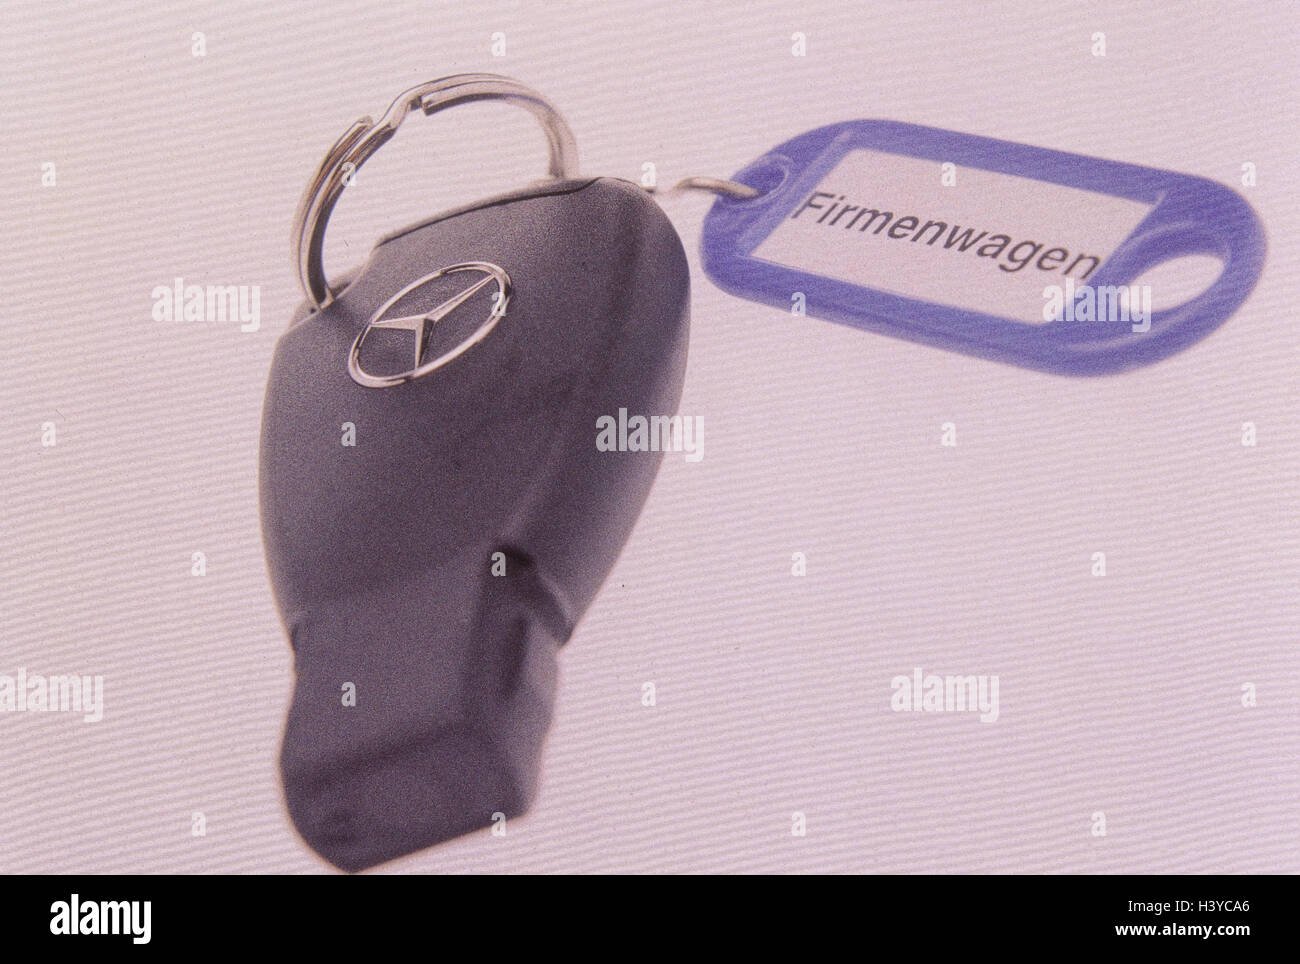 Autoschlüssel, Mercedes E-Klasse, Fernbedienung, Schlüsselanhänger